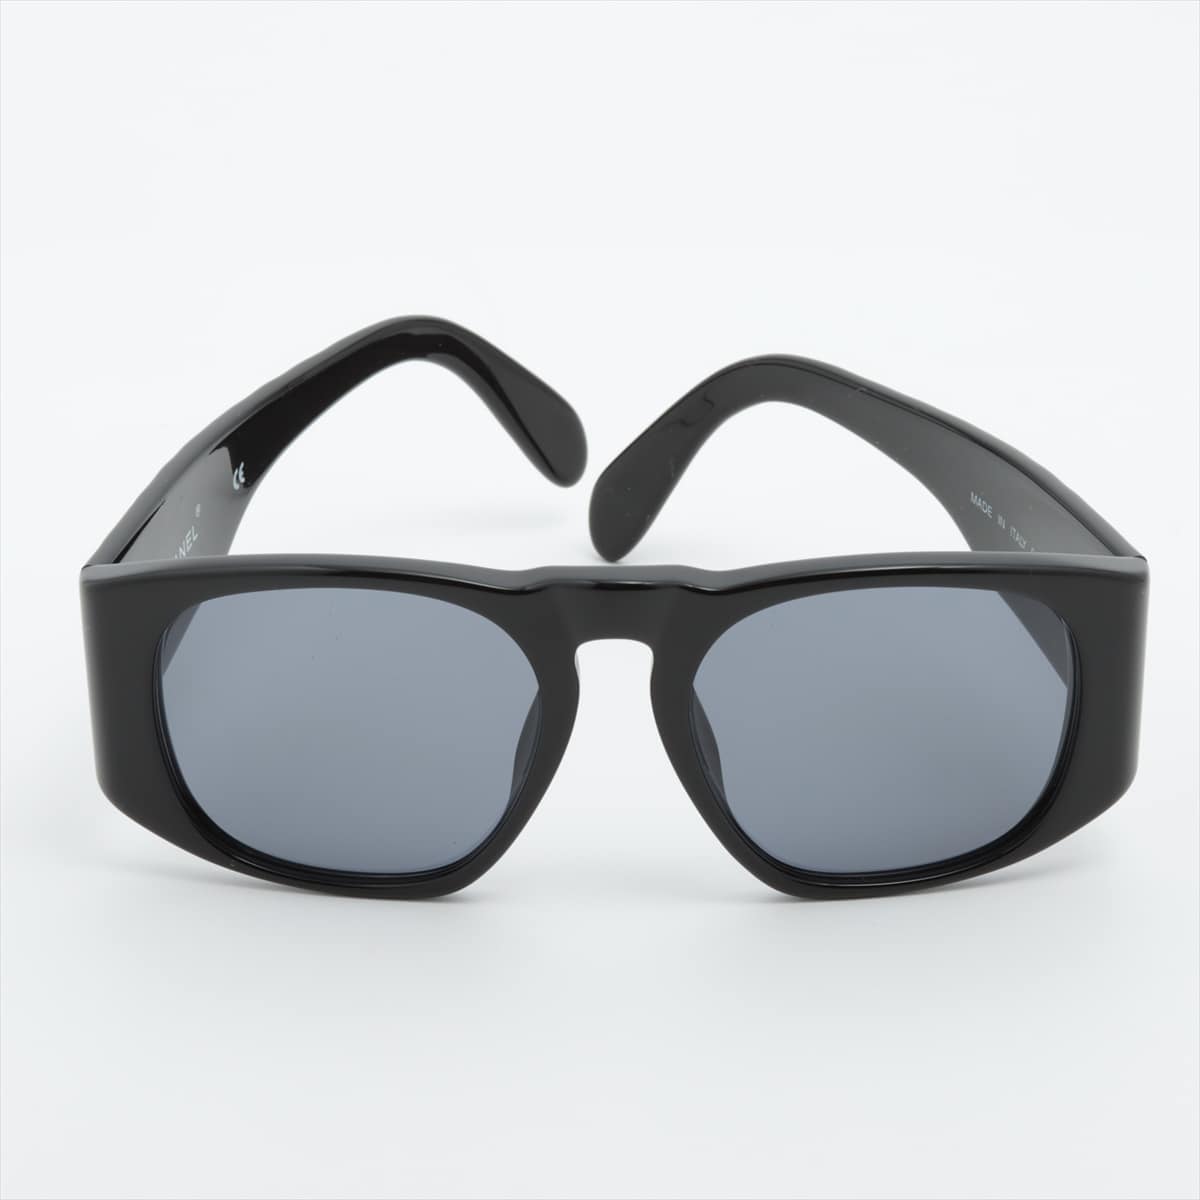 Chanel 01450 94305 Coco Mark Matelasse Sunglasses Plastic Black